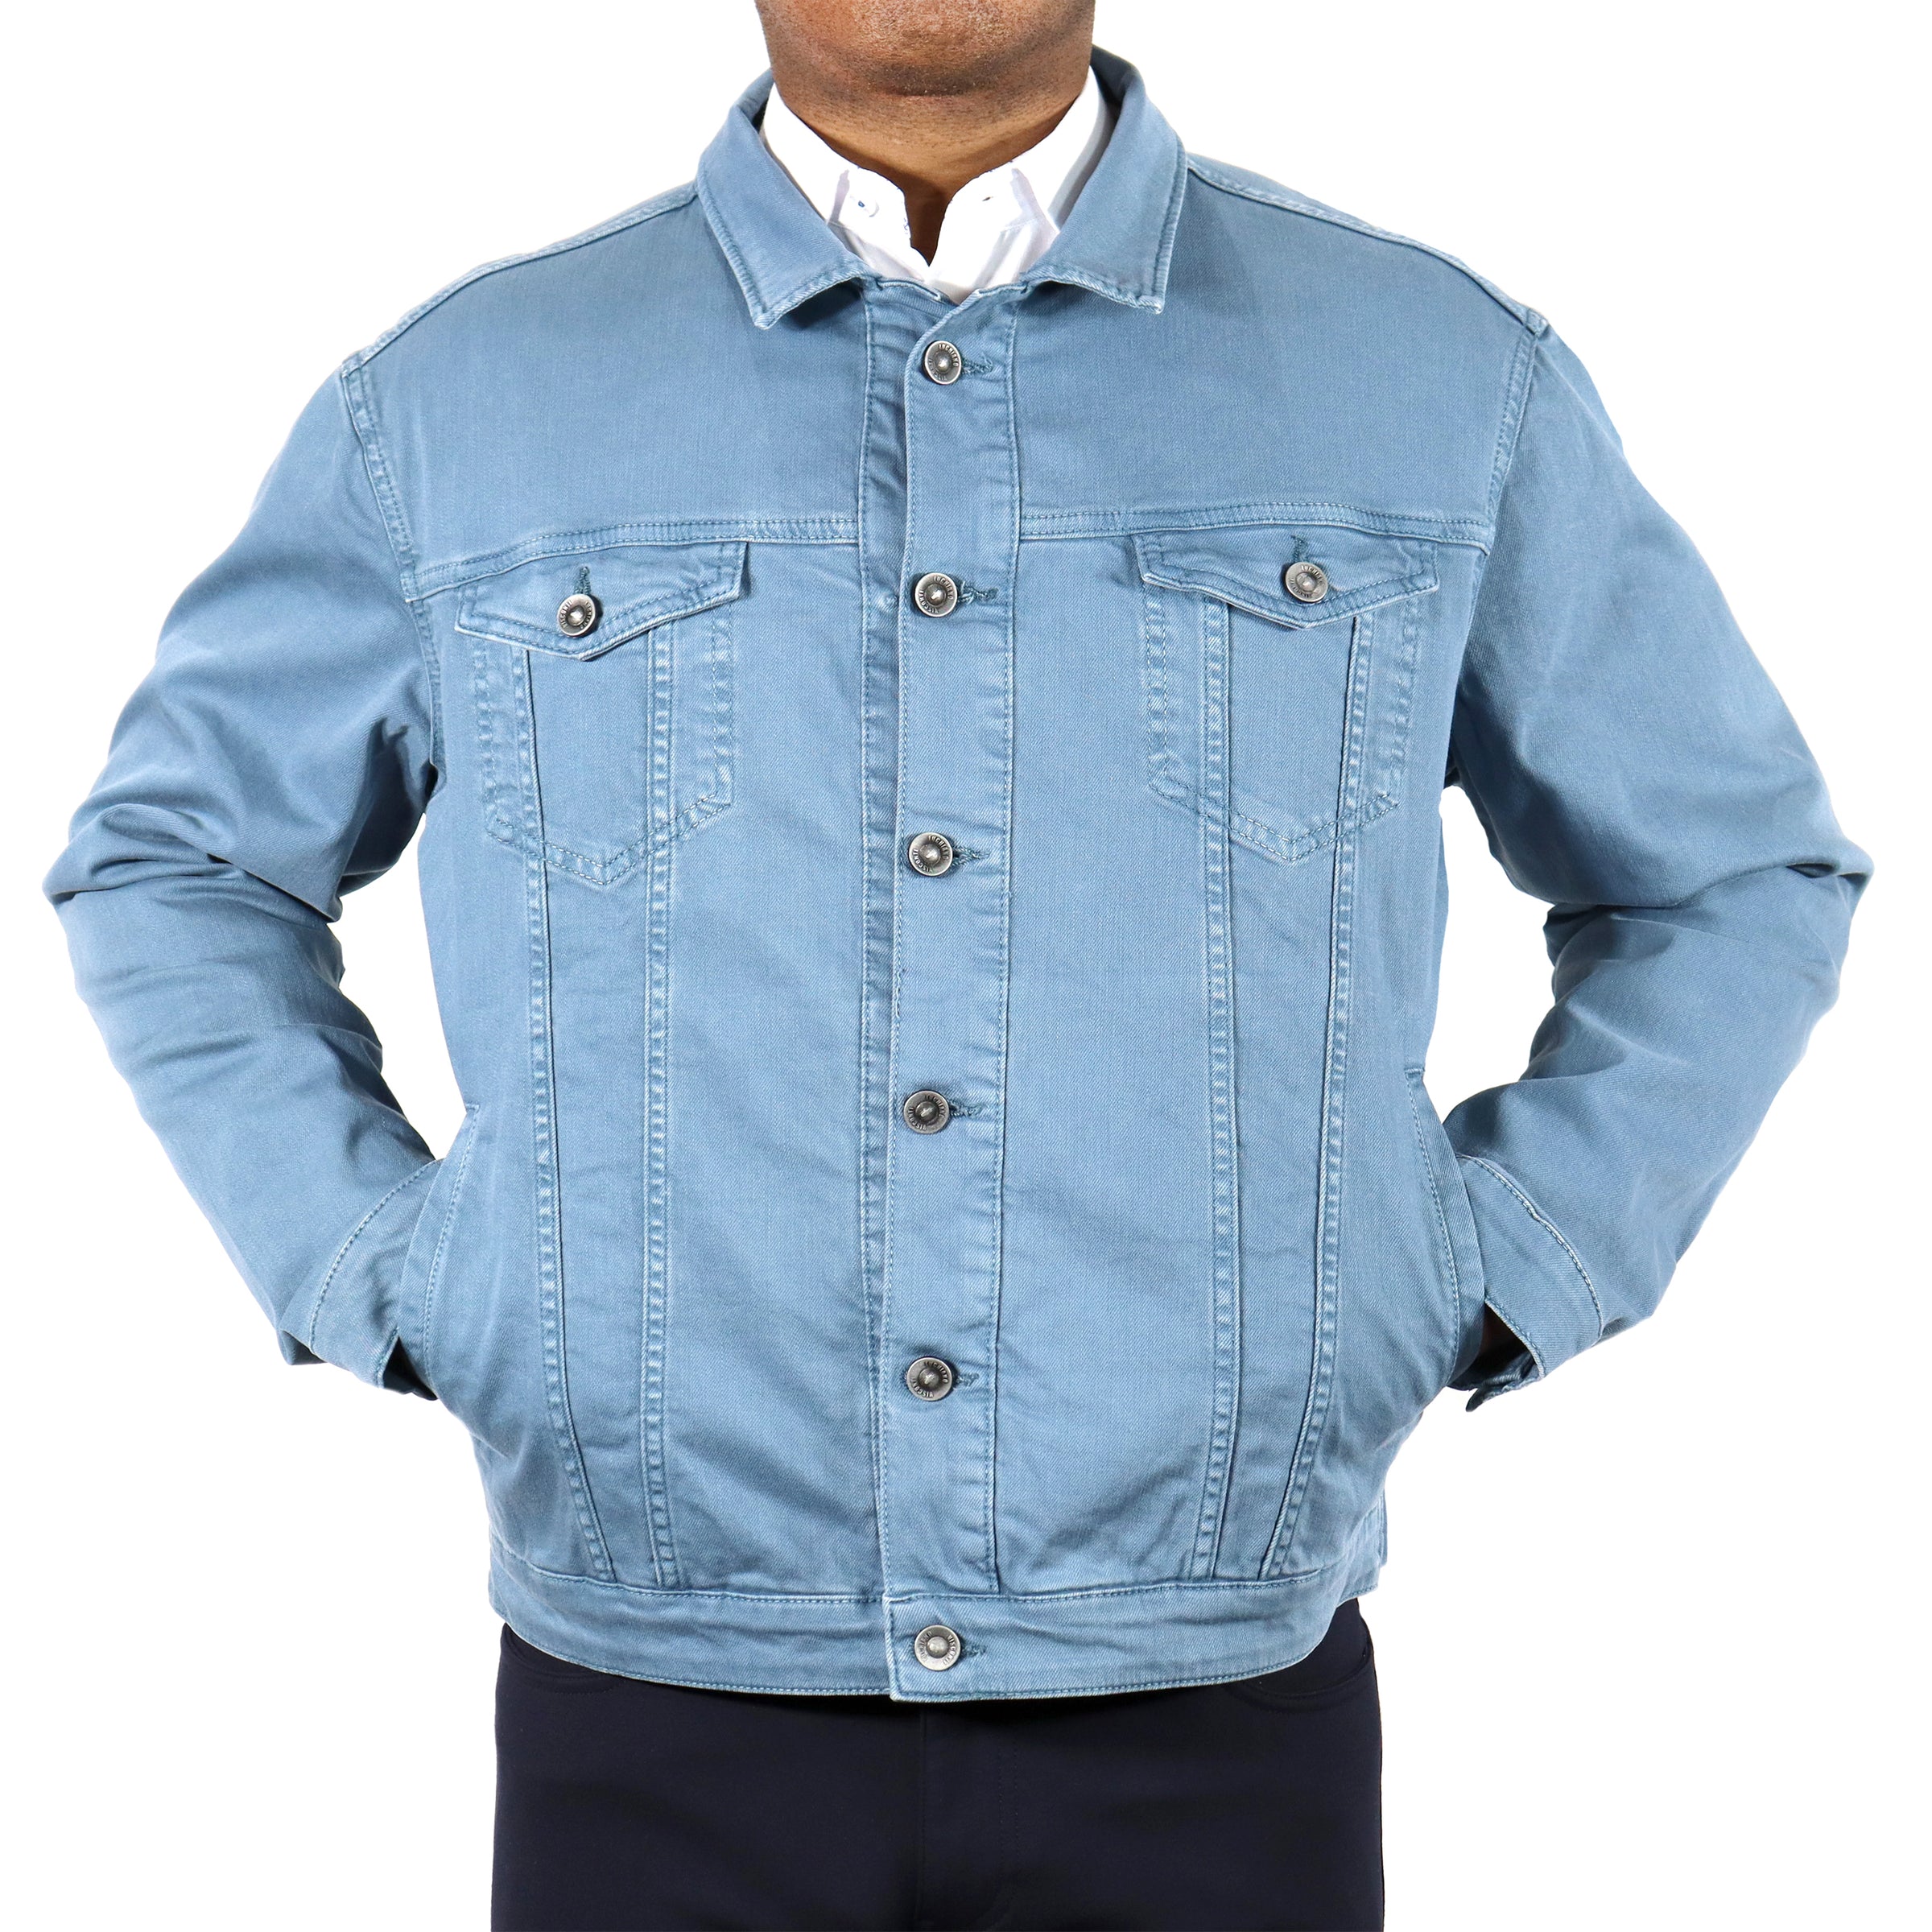 Aggregate more than 168 denim jacket blue colour